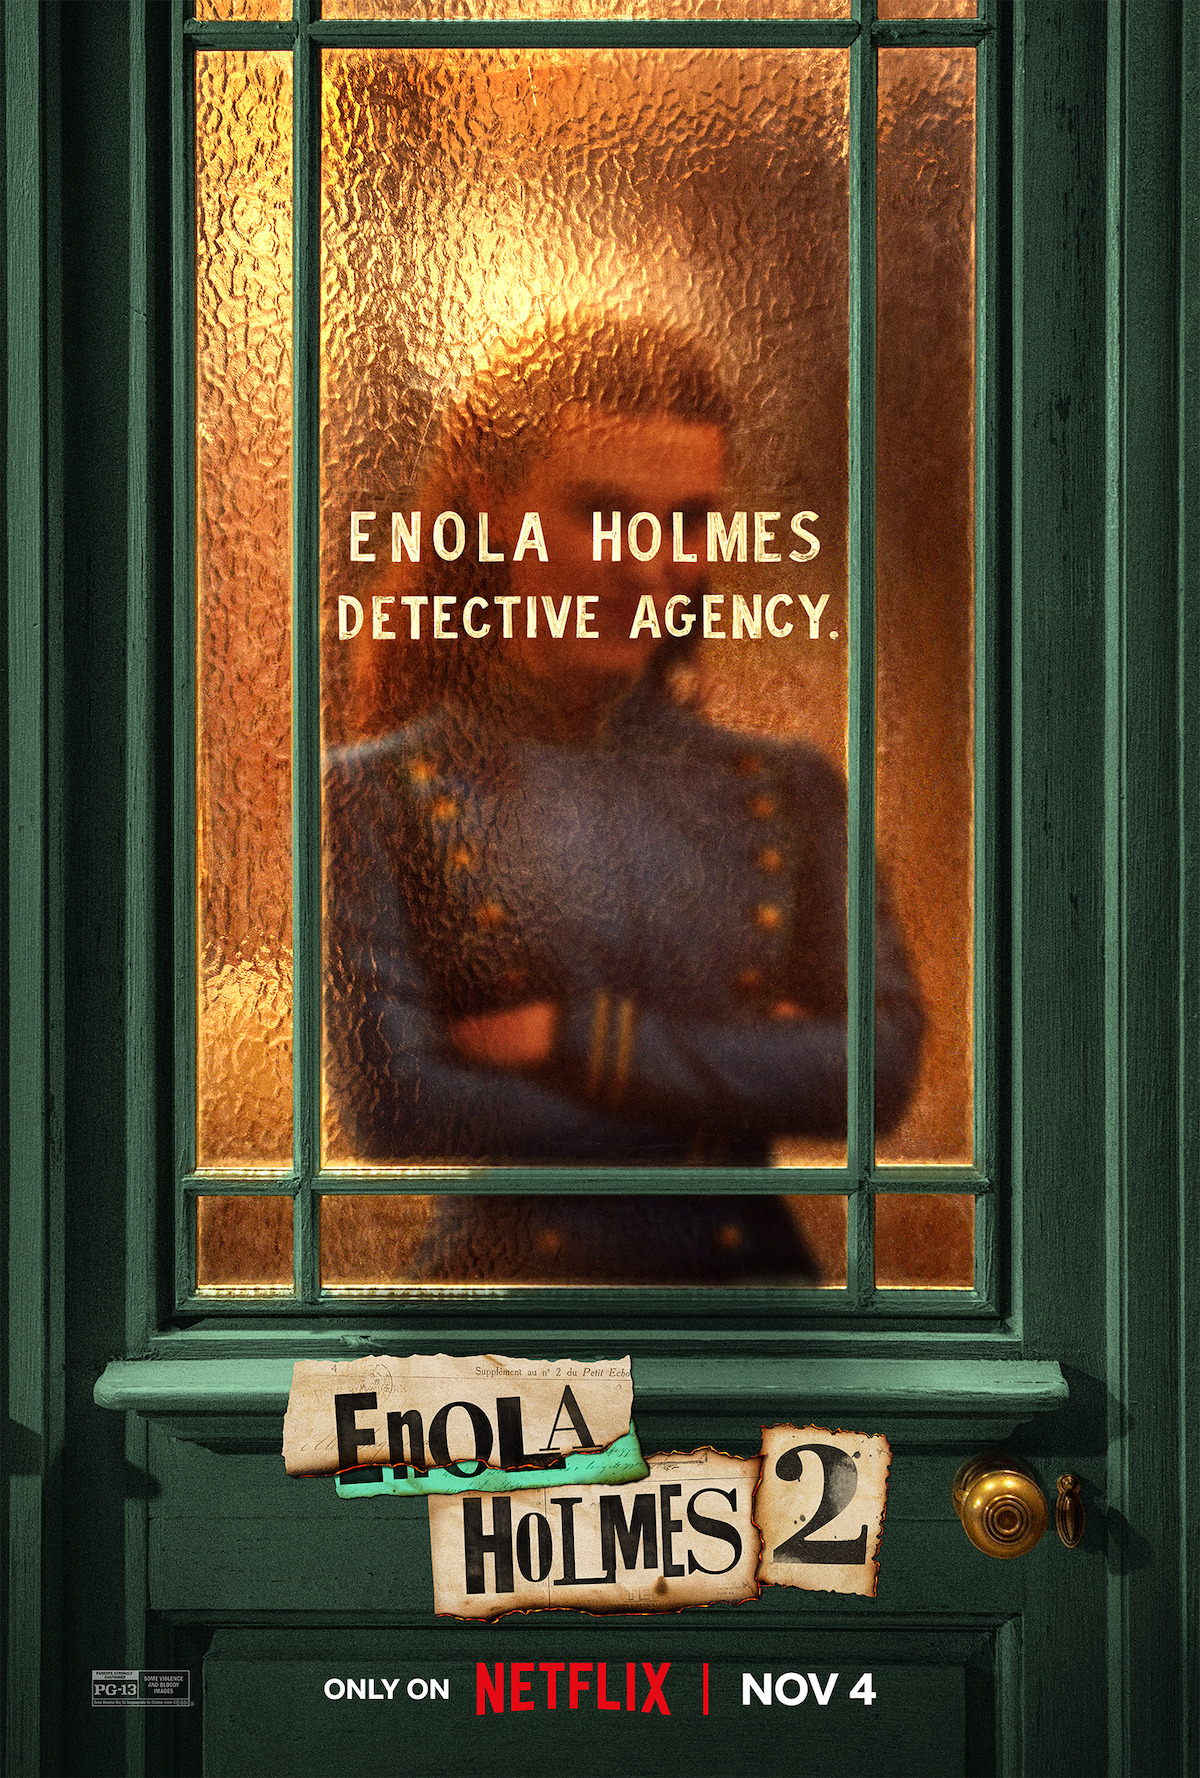 IMDb - Millie Bobby Brown and Helena Bonham Carter in Enola Holmes 2 (2022)  🕵🏻‍♀️ Coming to @Netflix this November